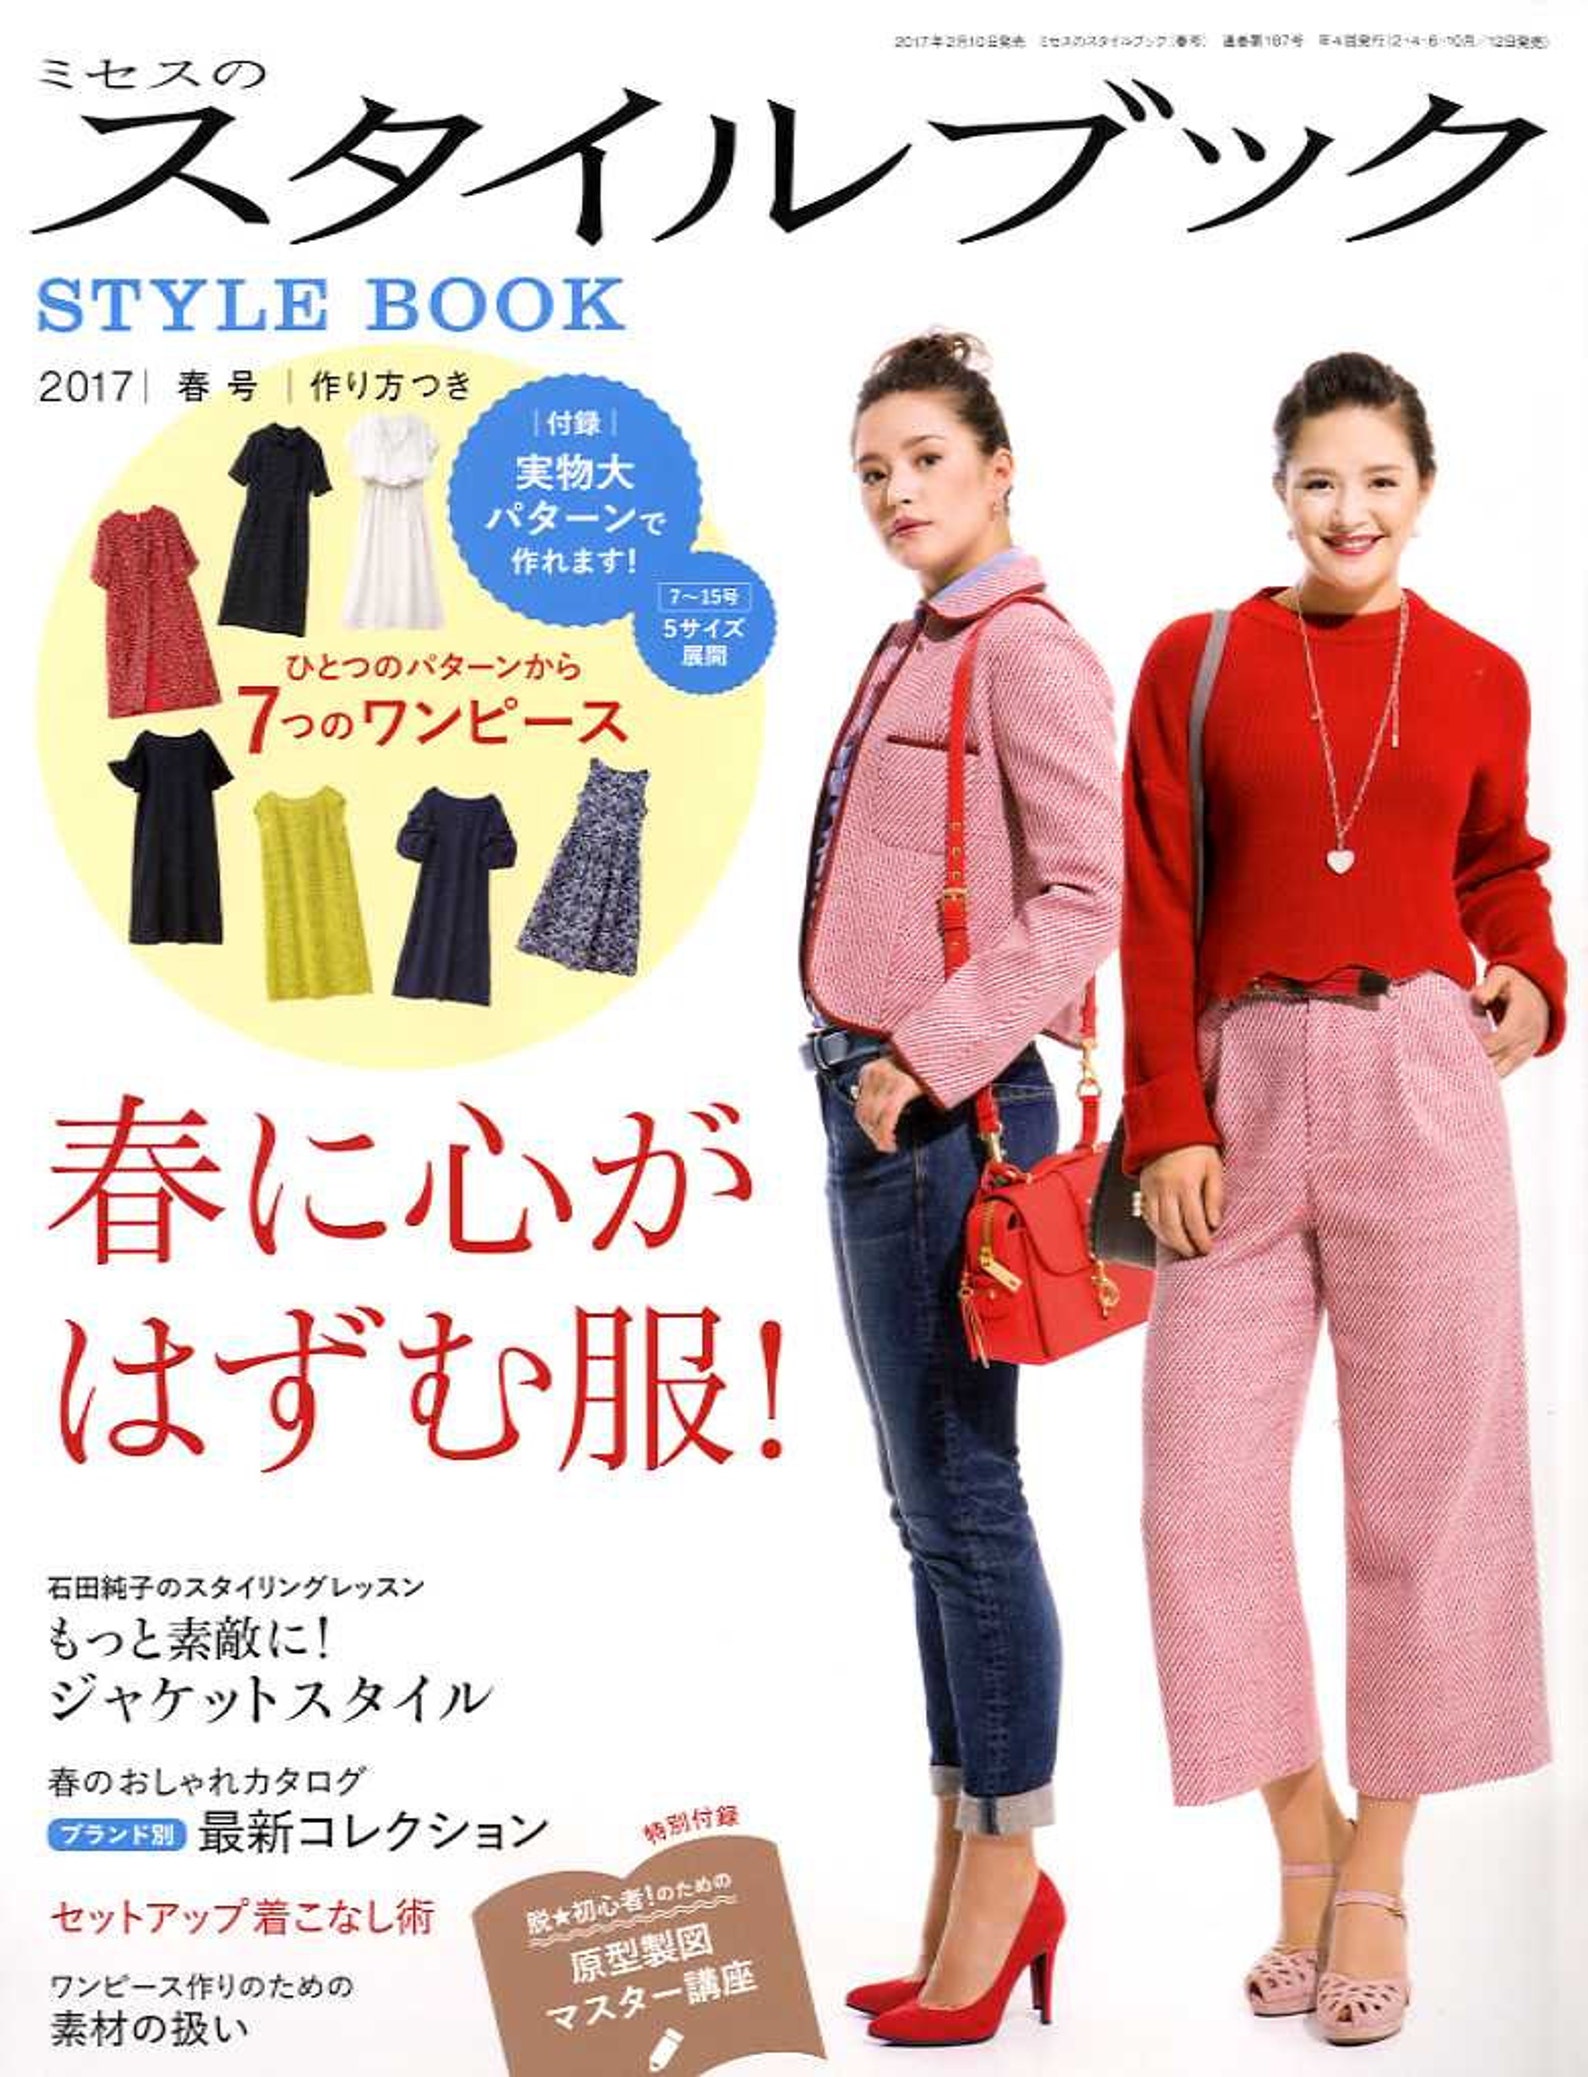 Style book. Style book японский журнал. Японский журнал мод Mrs Style book. Стиль Hanbok. Книга по стилю для женщин.